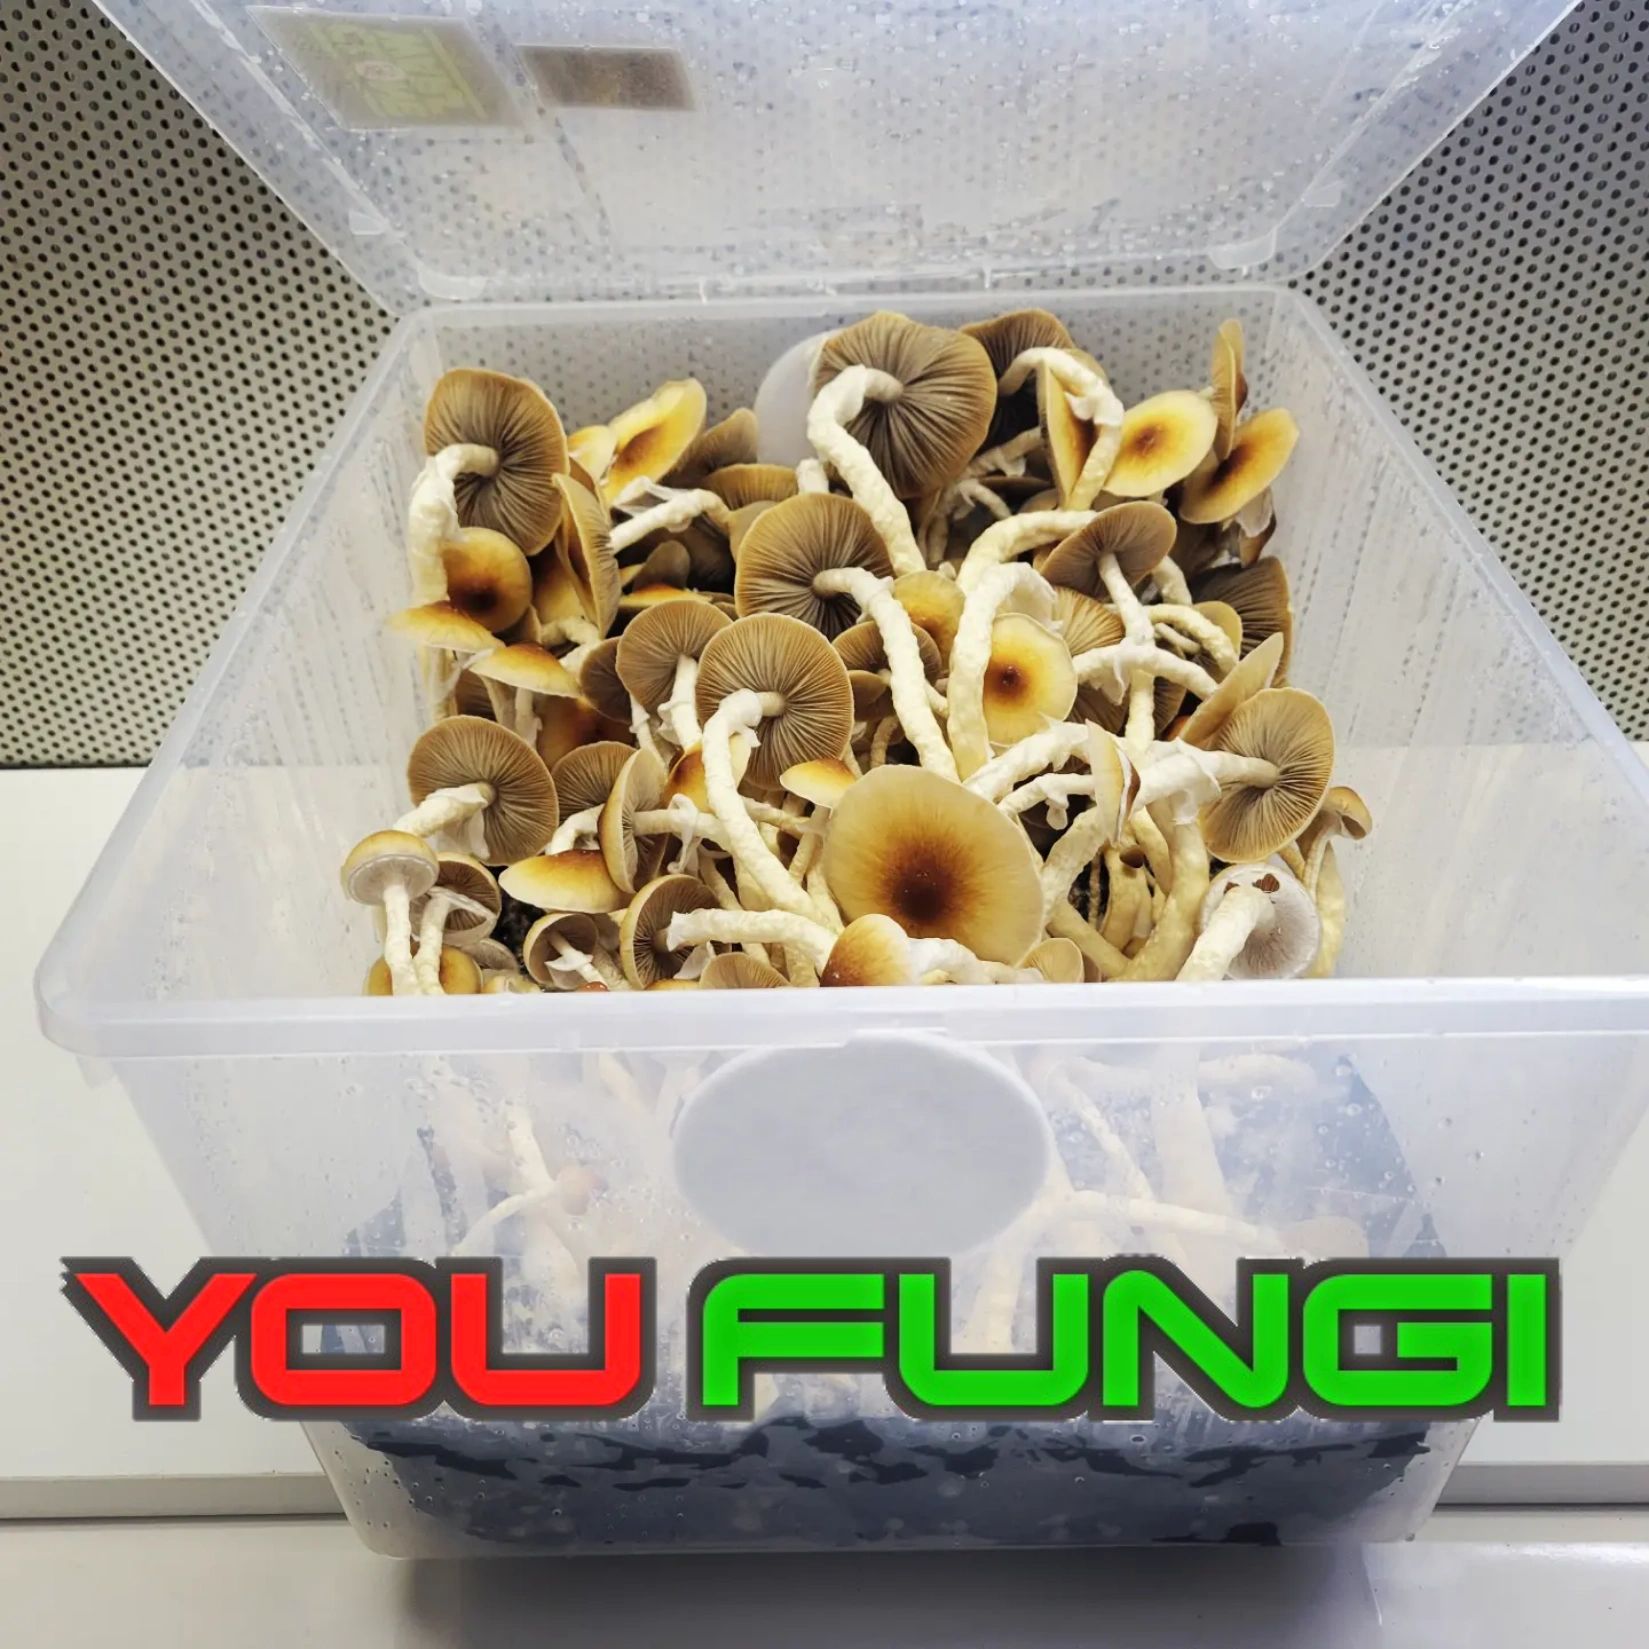 Magic Mushroom Genetics
Mushroom Spawn & Substrate
Psychedelic Grow Kits & Learning
ramushrooms.ca